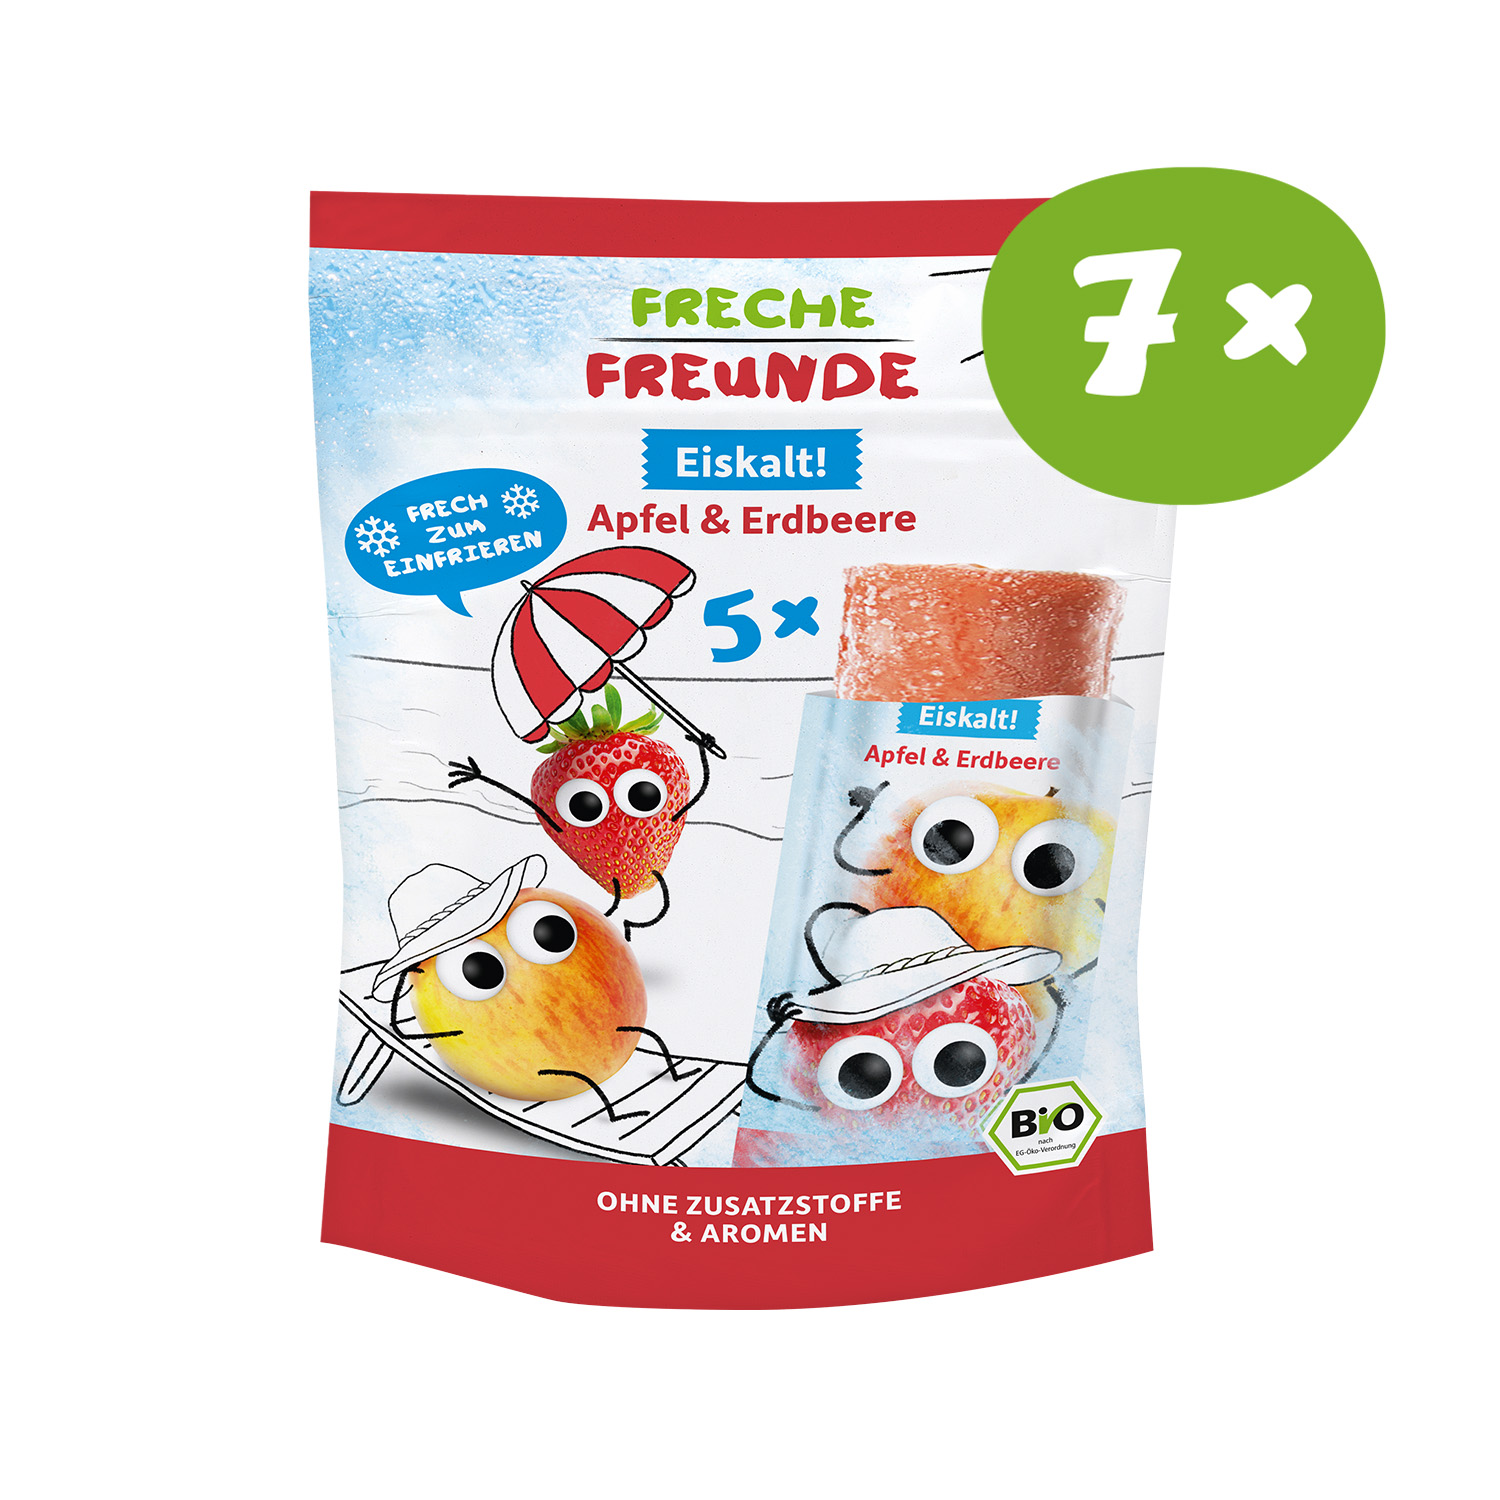 FrecheFreunde Eiskalt_Apfel_Erdbeere-7x